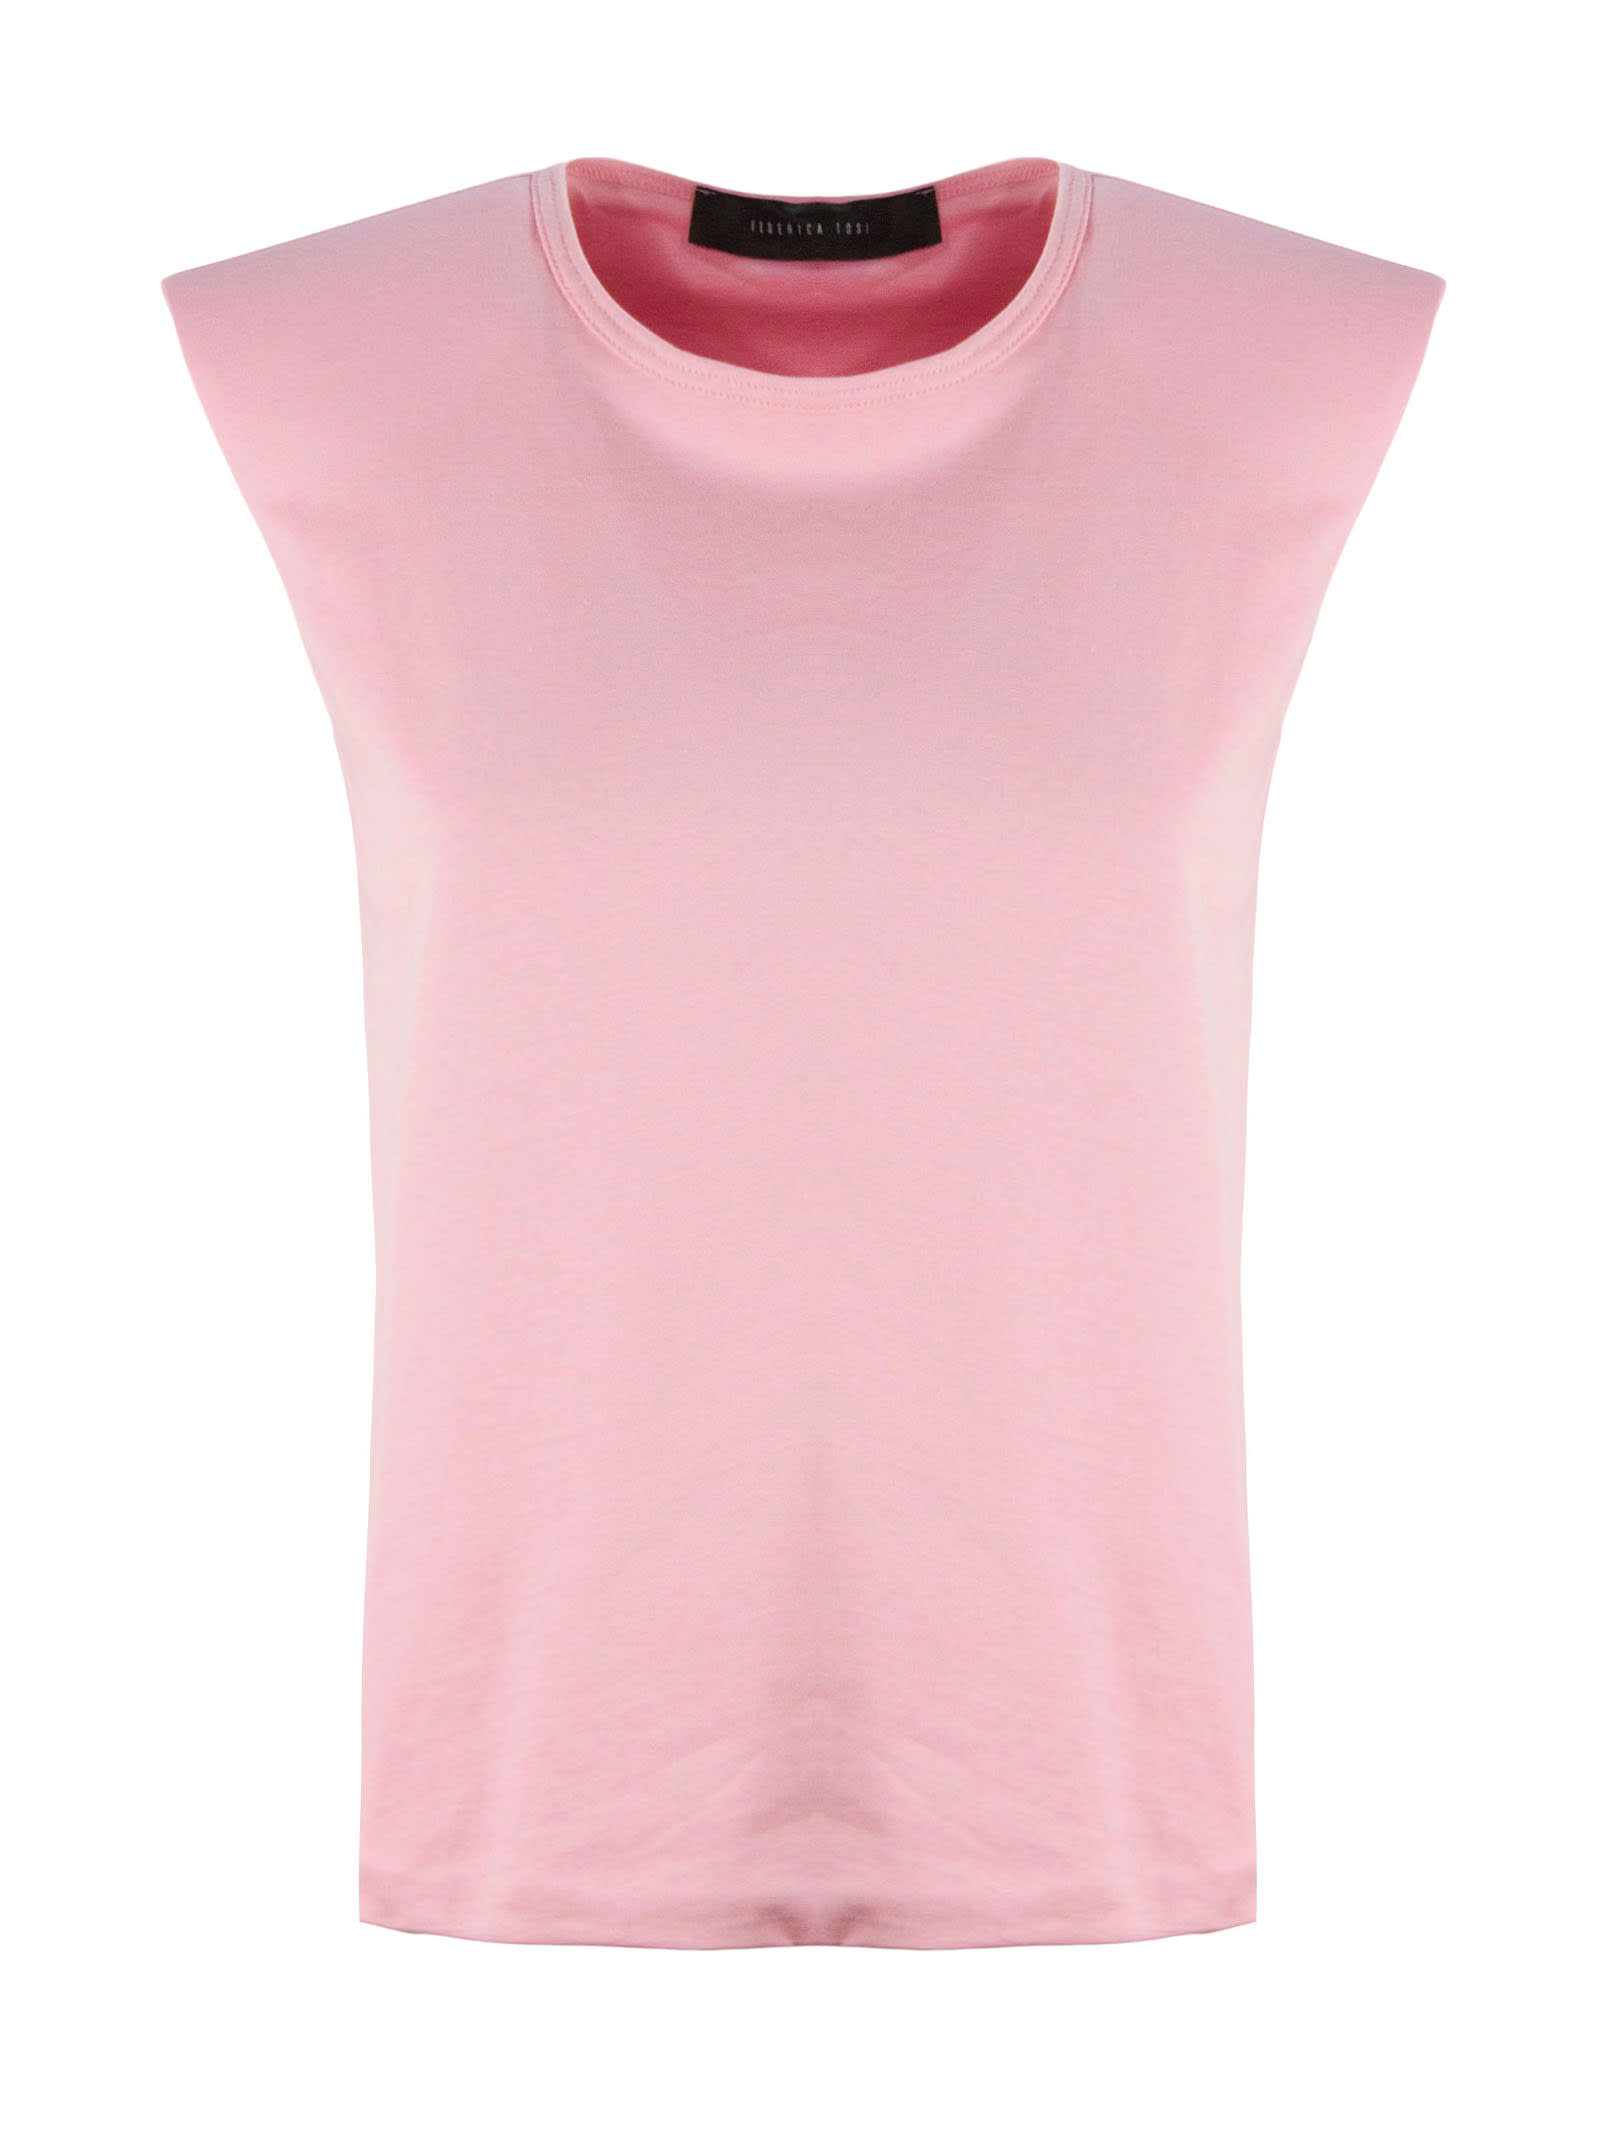 Federica Tosi Pink Cotton T-shirt